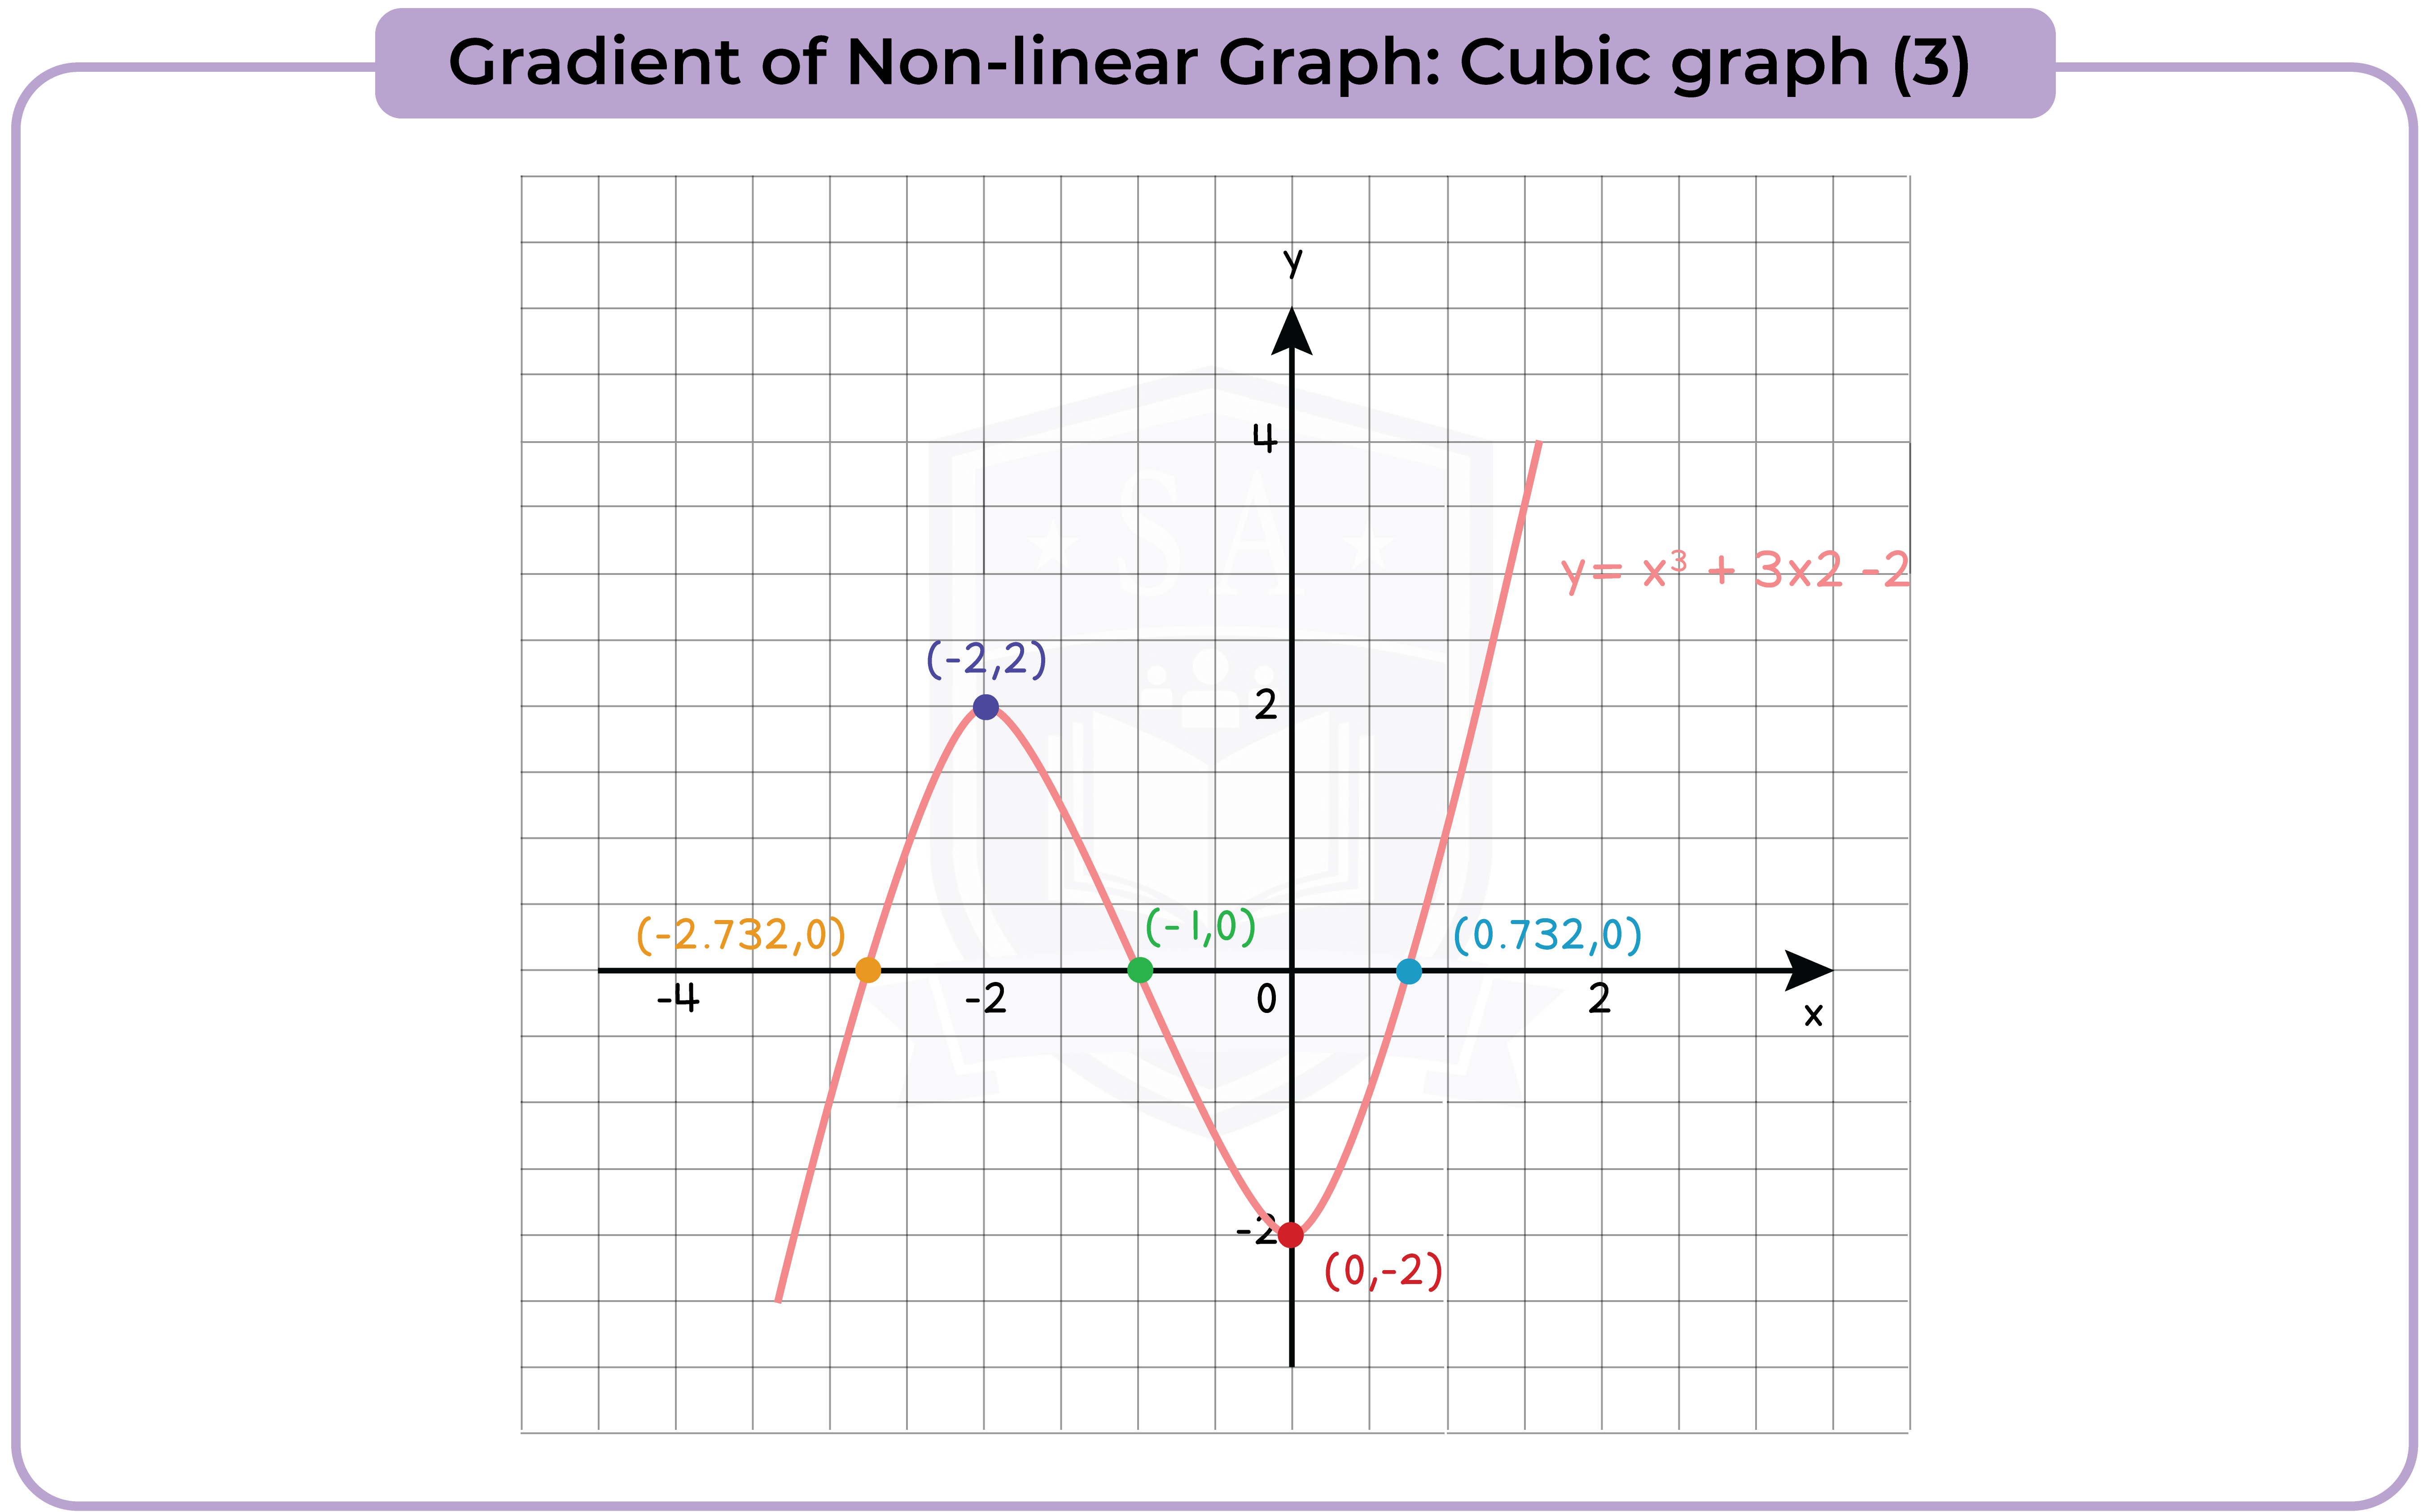 edexcel_igcse_mathematics a_topic 23_graphs_024_Gradient of Non-linear Graph: Cubic graph (3)